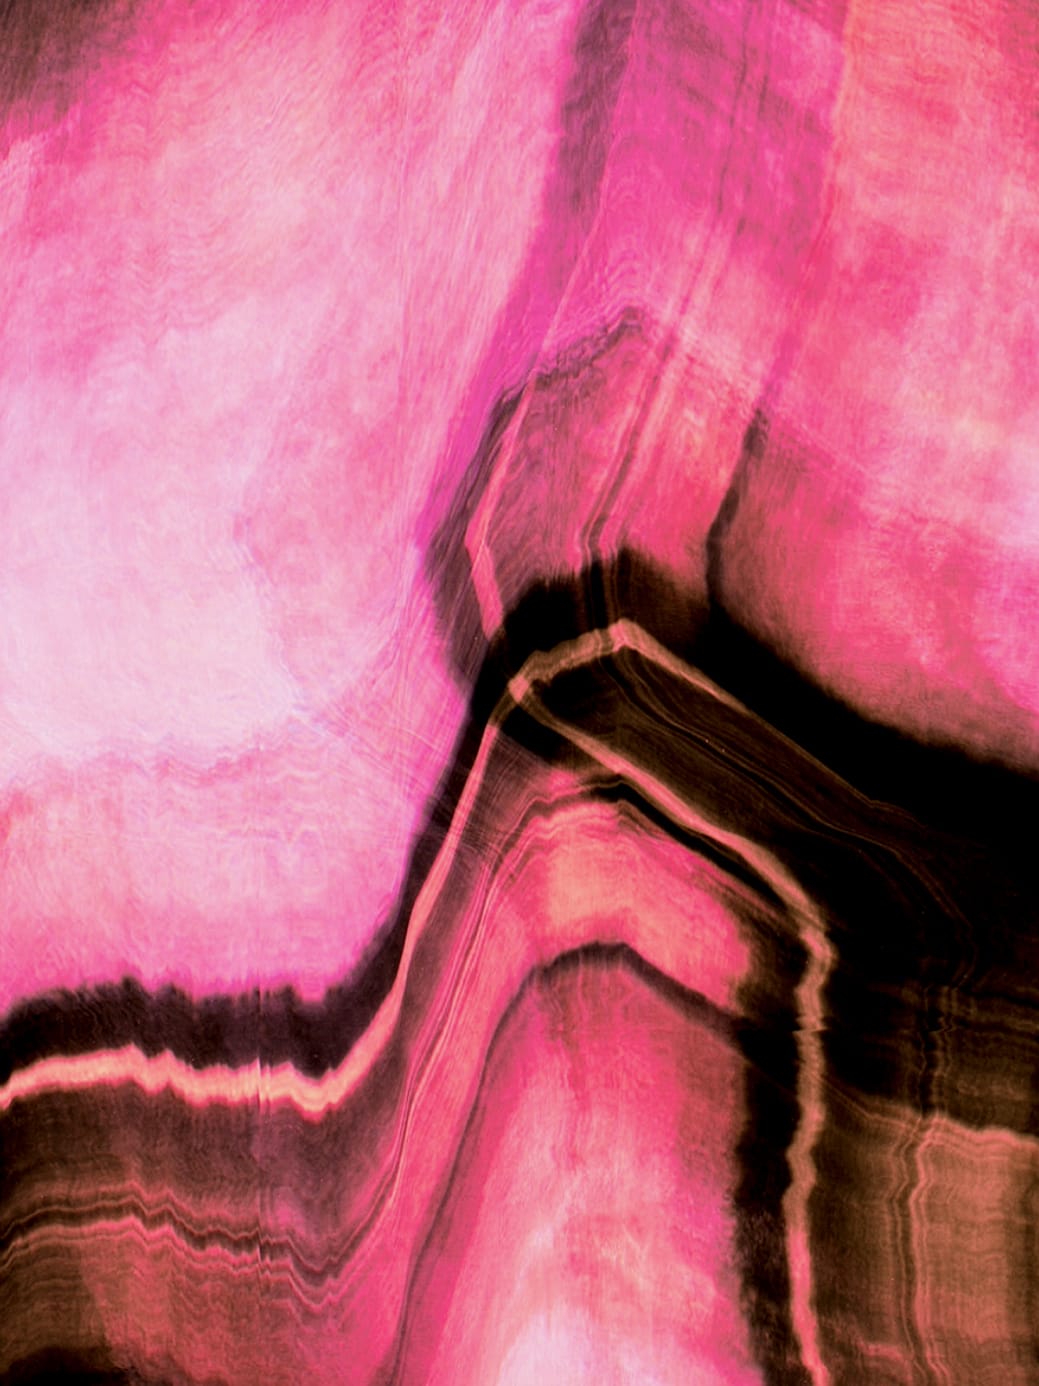 Fotografía, Scanography by Michael Monney aka acylmx, Imagen abstracta en rosa